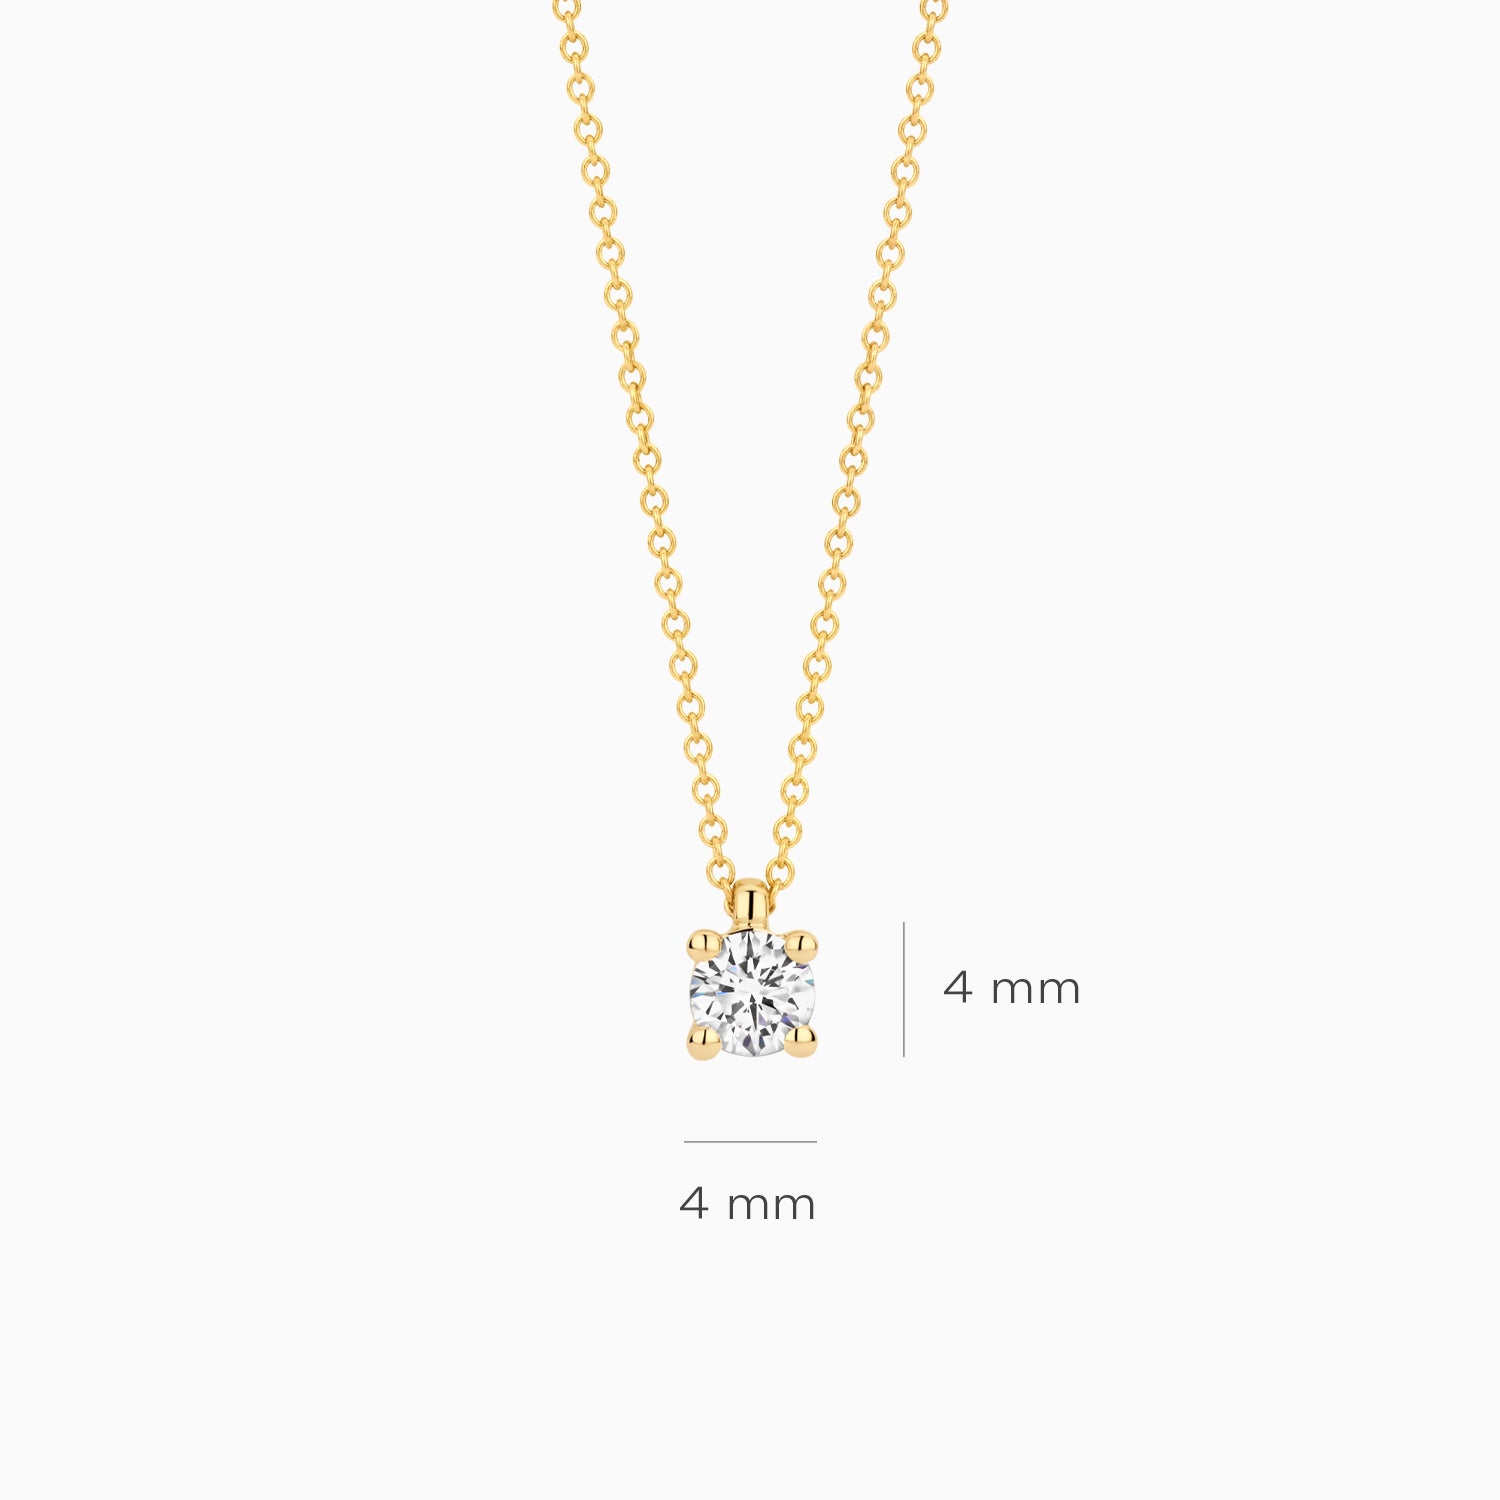 Lab diamonds necklace LG3001Y - 14k Yellow gold